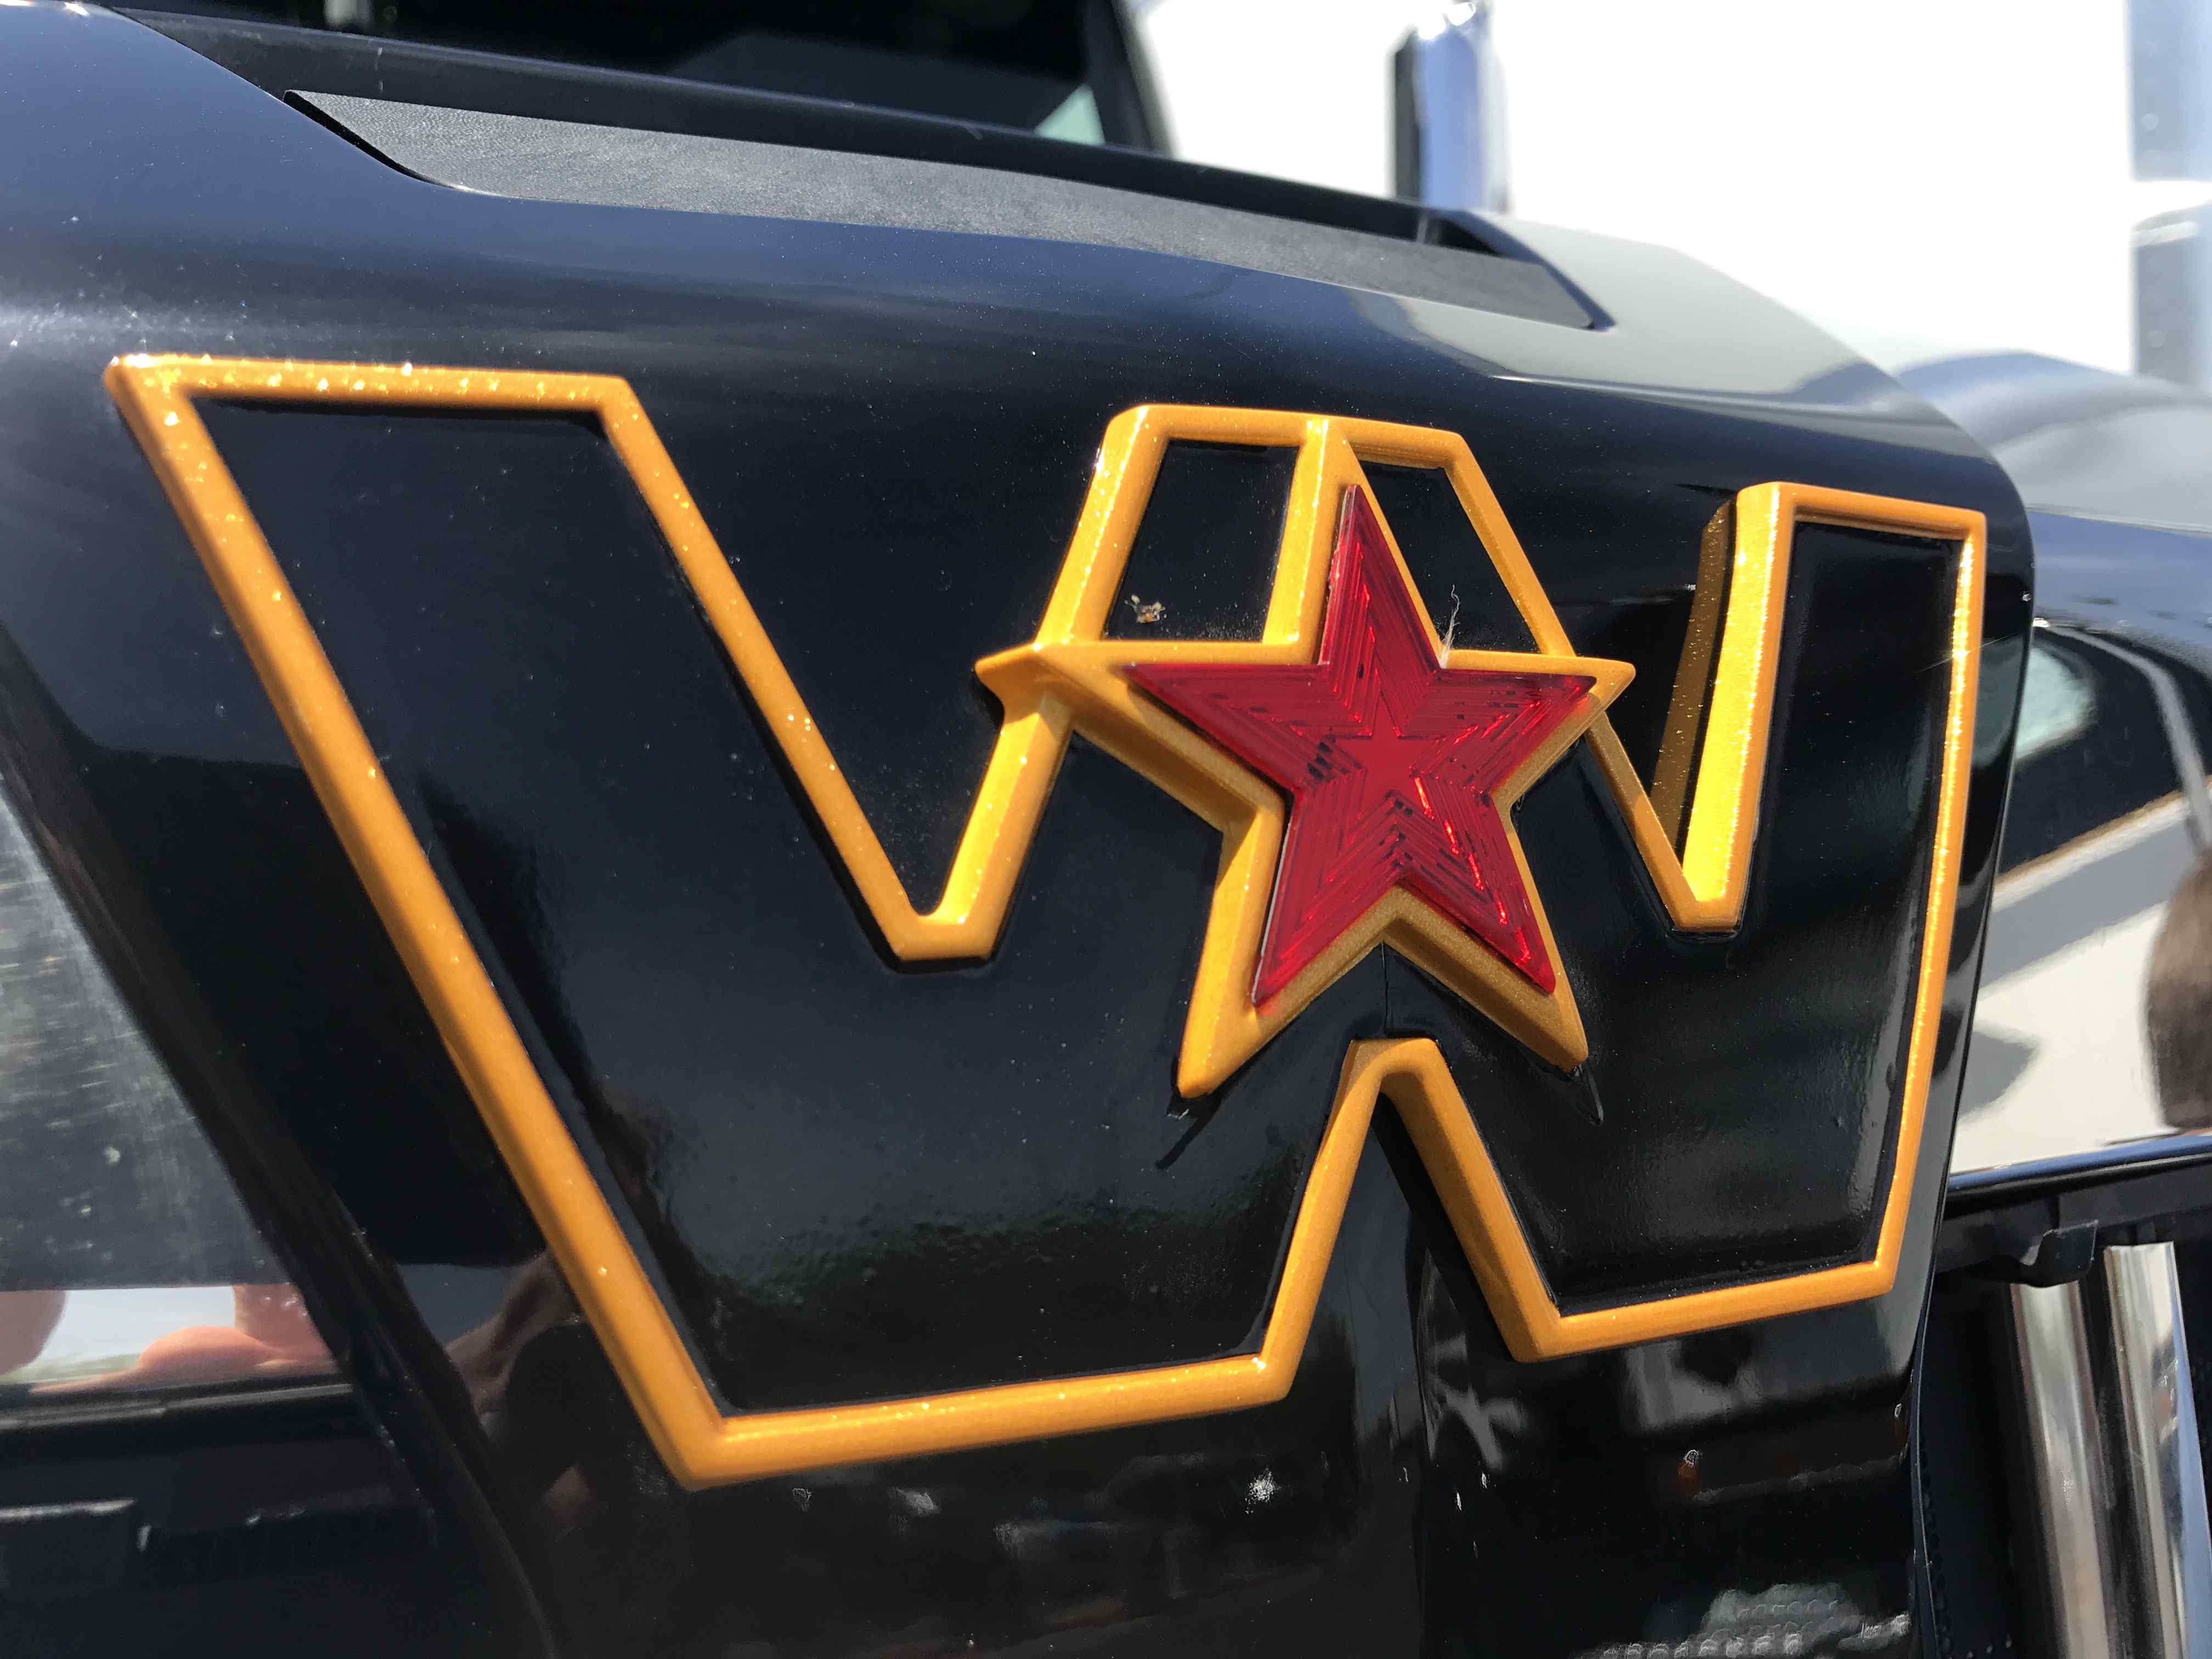 New Western Star Trucks Logo - Western Star has revolutionized its endless growing brand